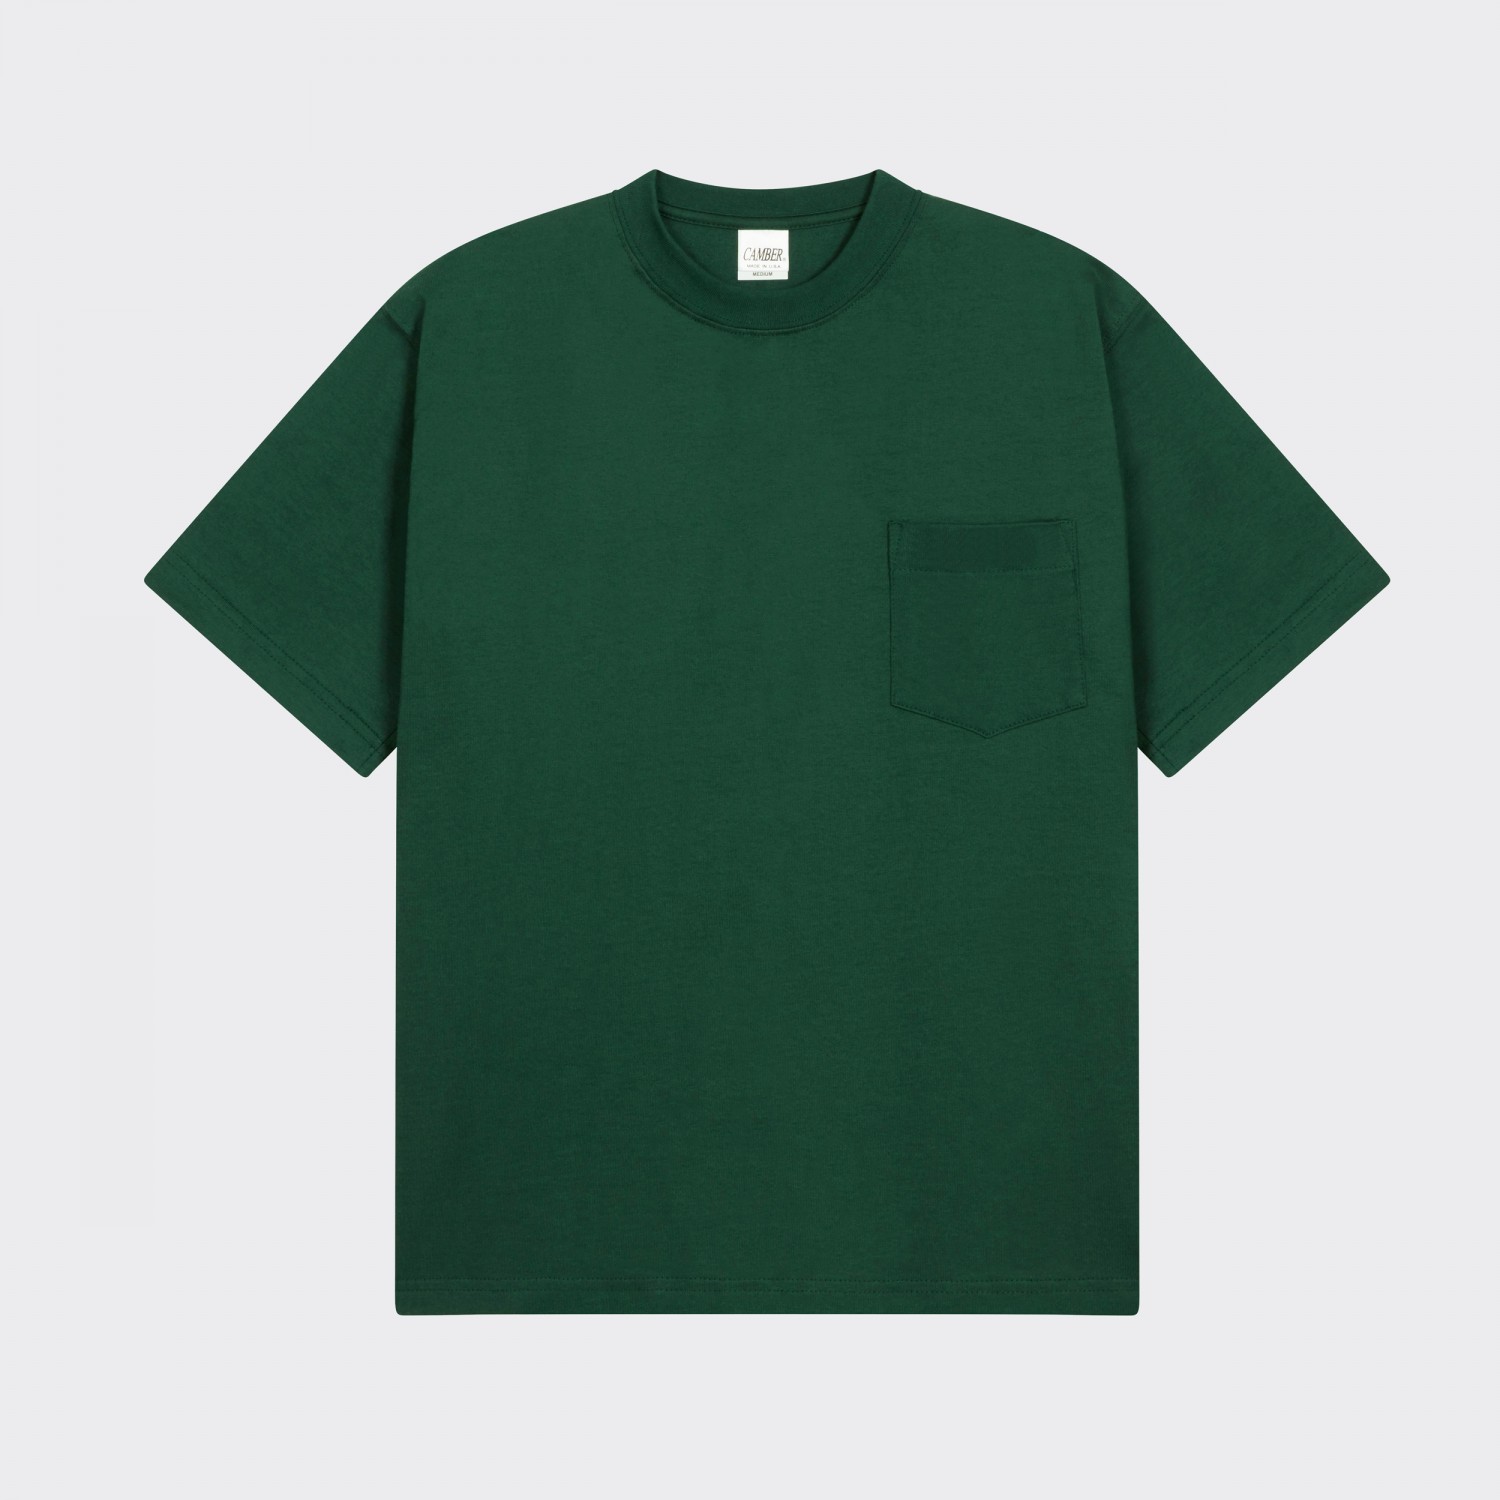 Camber USA : Pocket : T-shirt Dartmouth Green